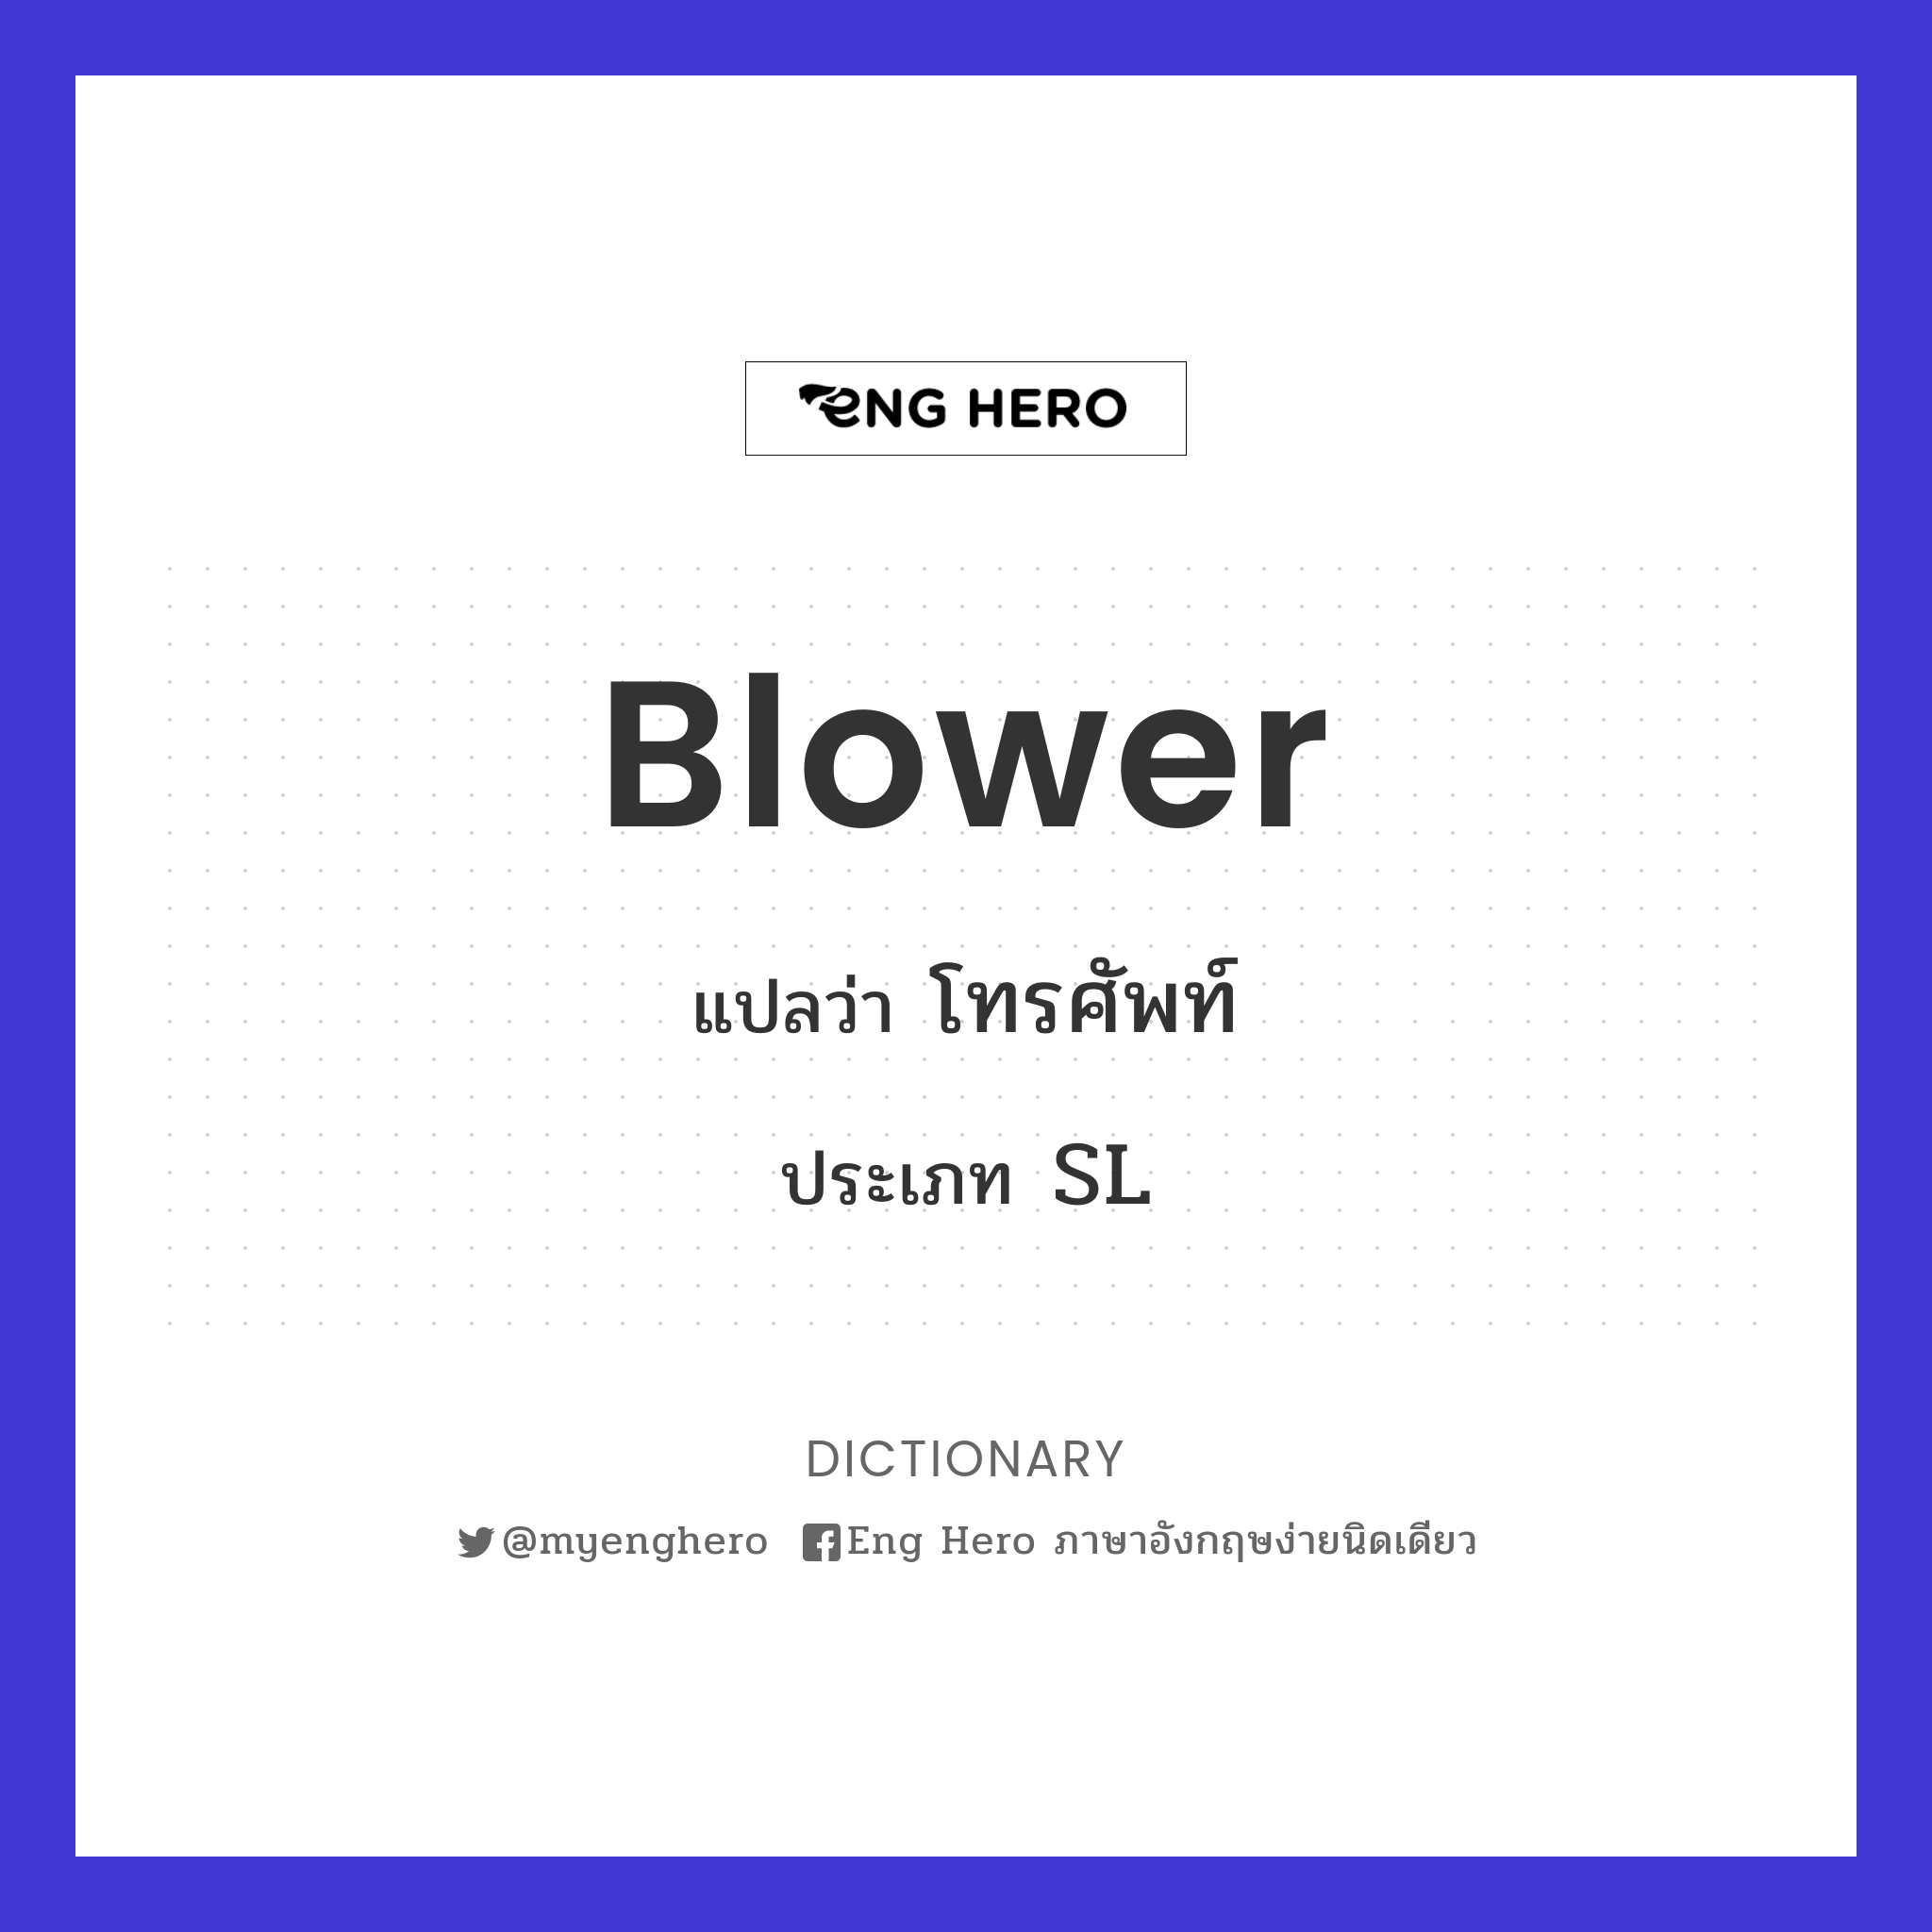 blower